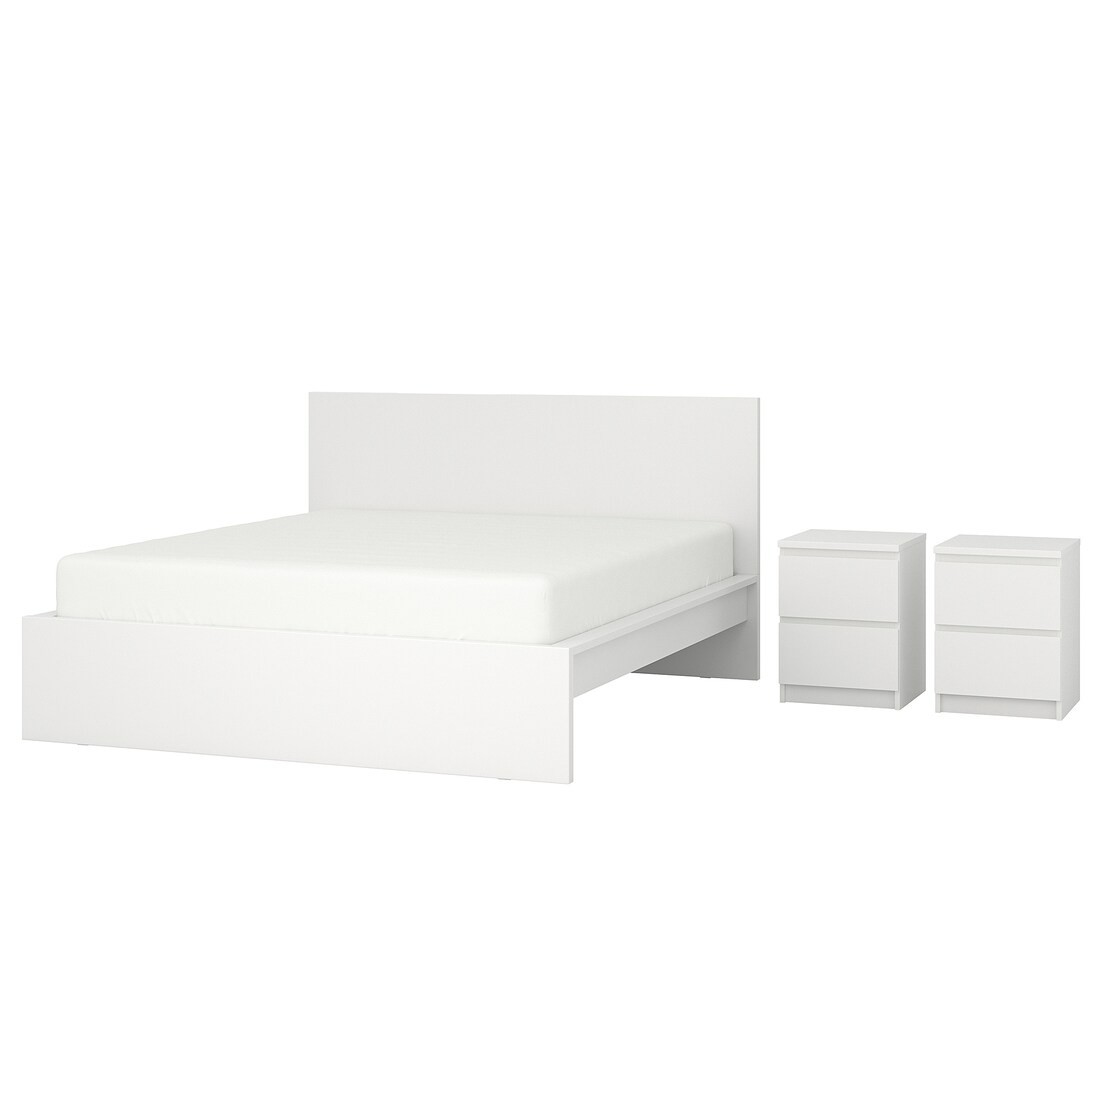 MALM МАЛЬМ Набор мебели для спальни 3 шт, белый, 180x200 см